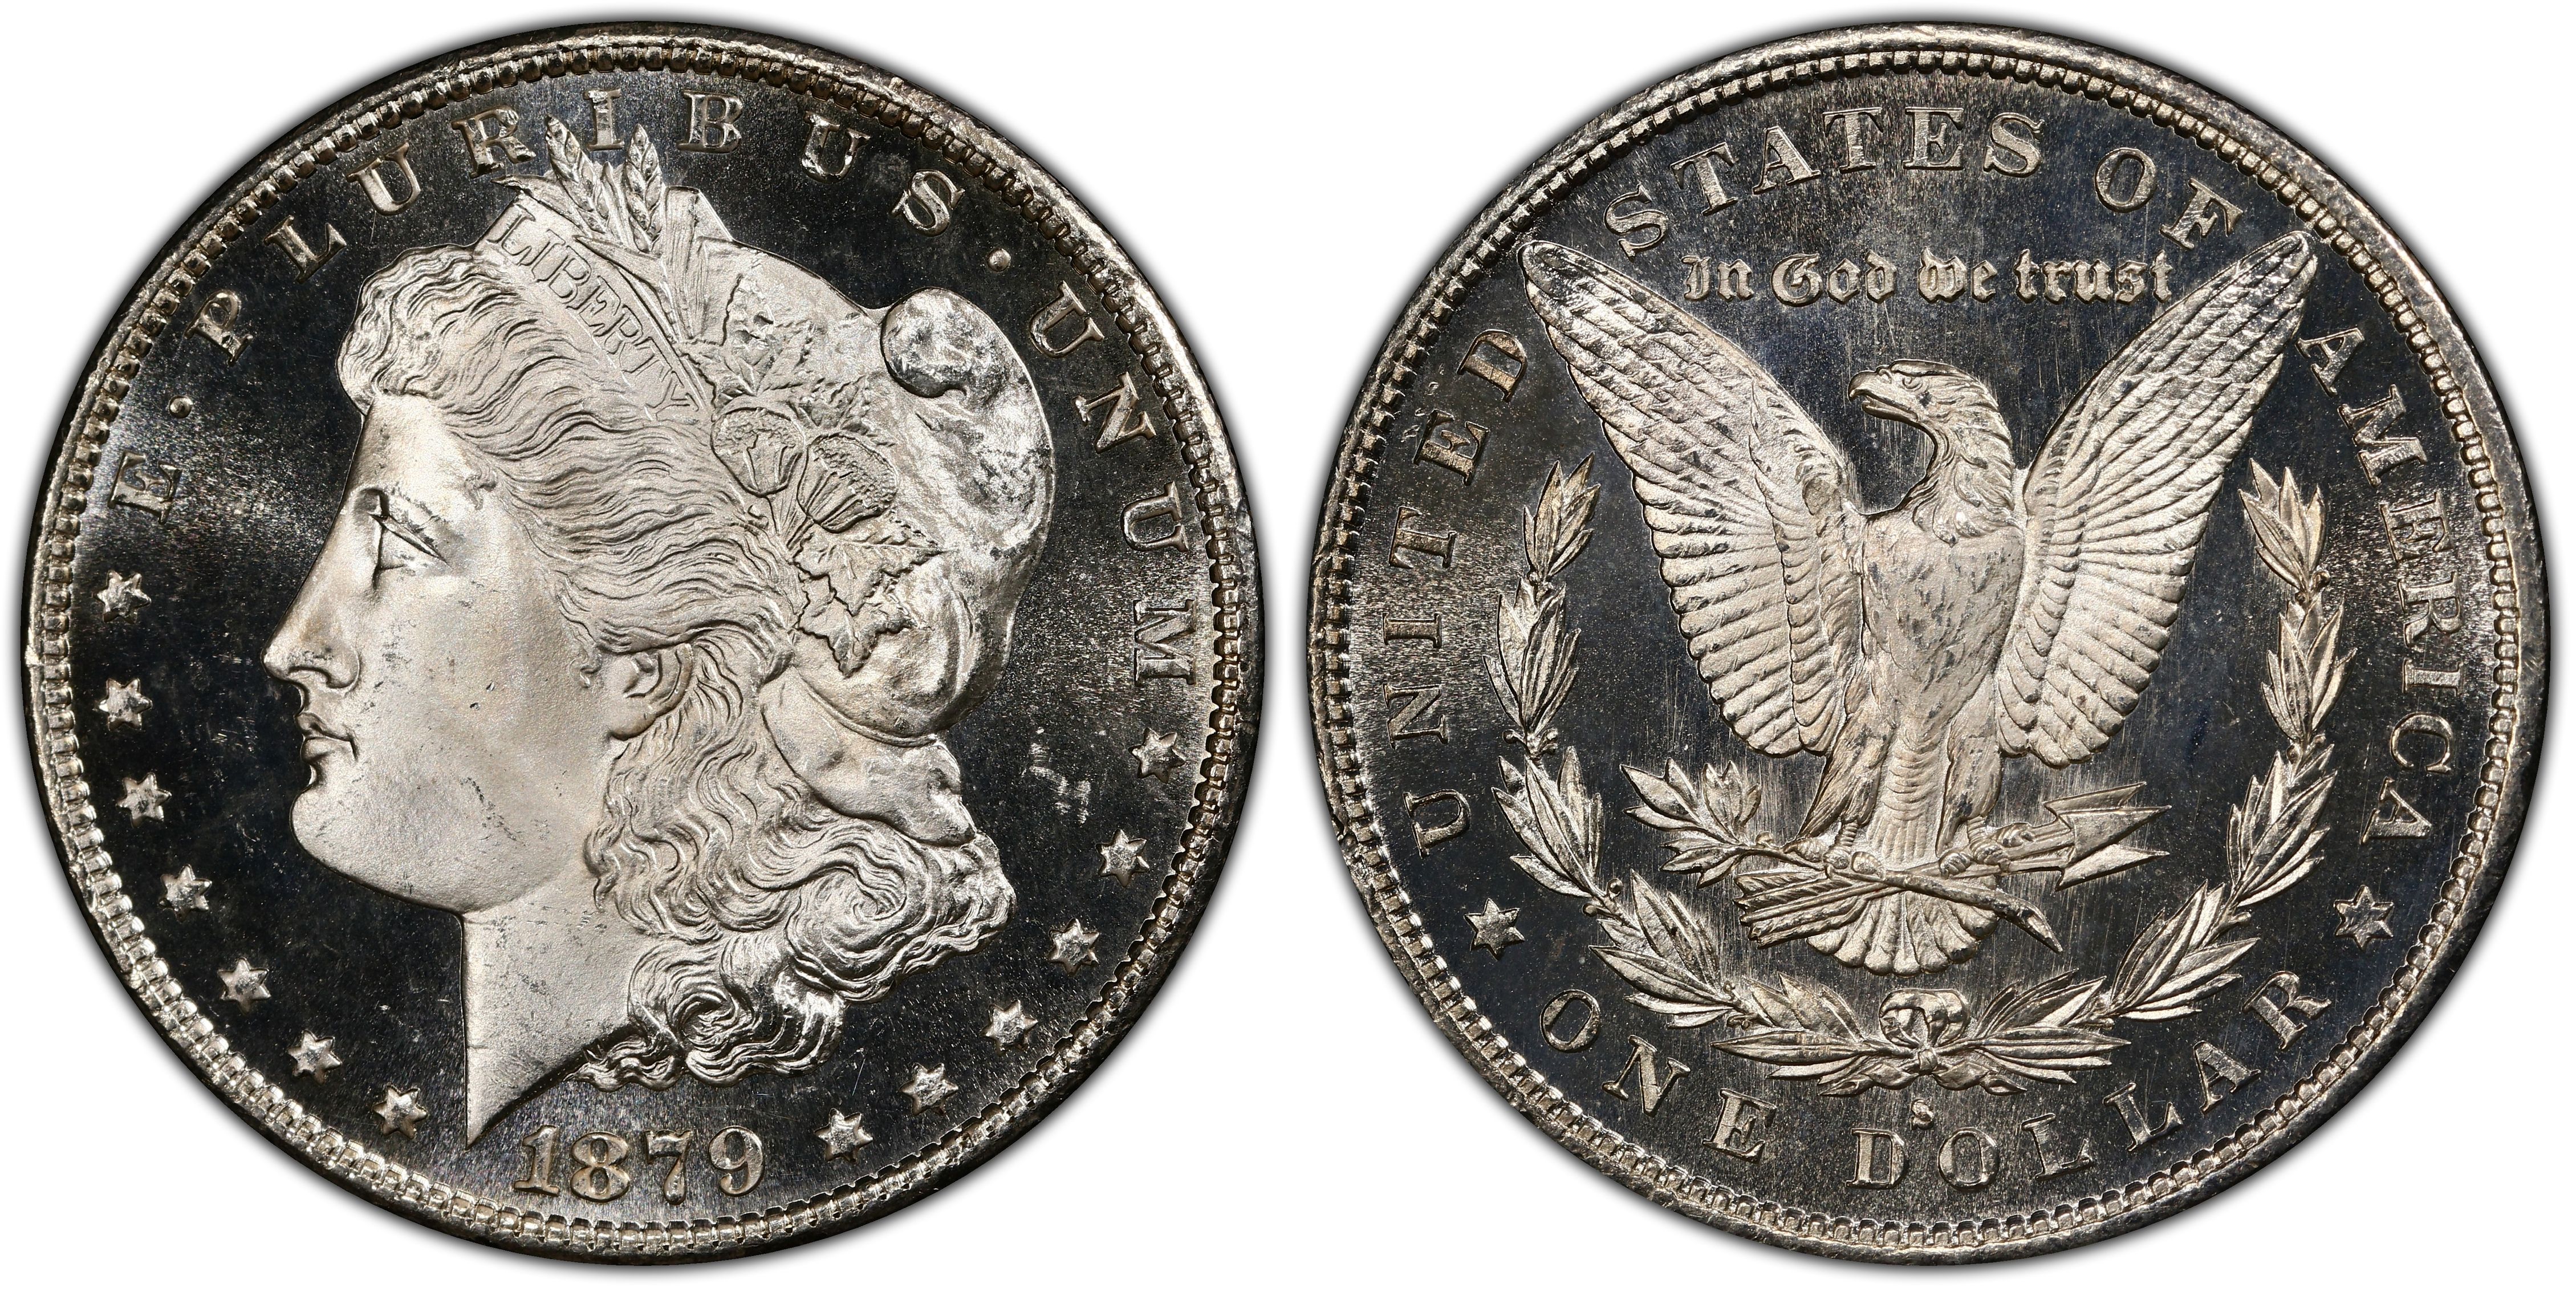 1879-S $1, PL (Regular Strike) Morgan Dollar - PCGS CoinFacts